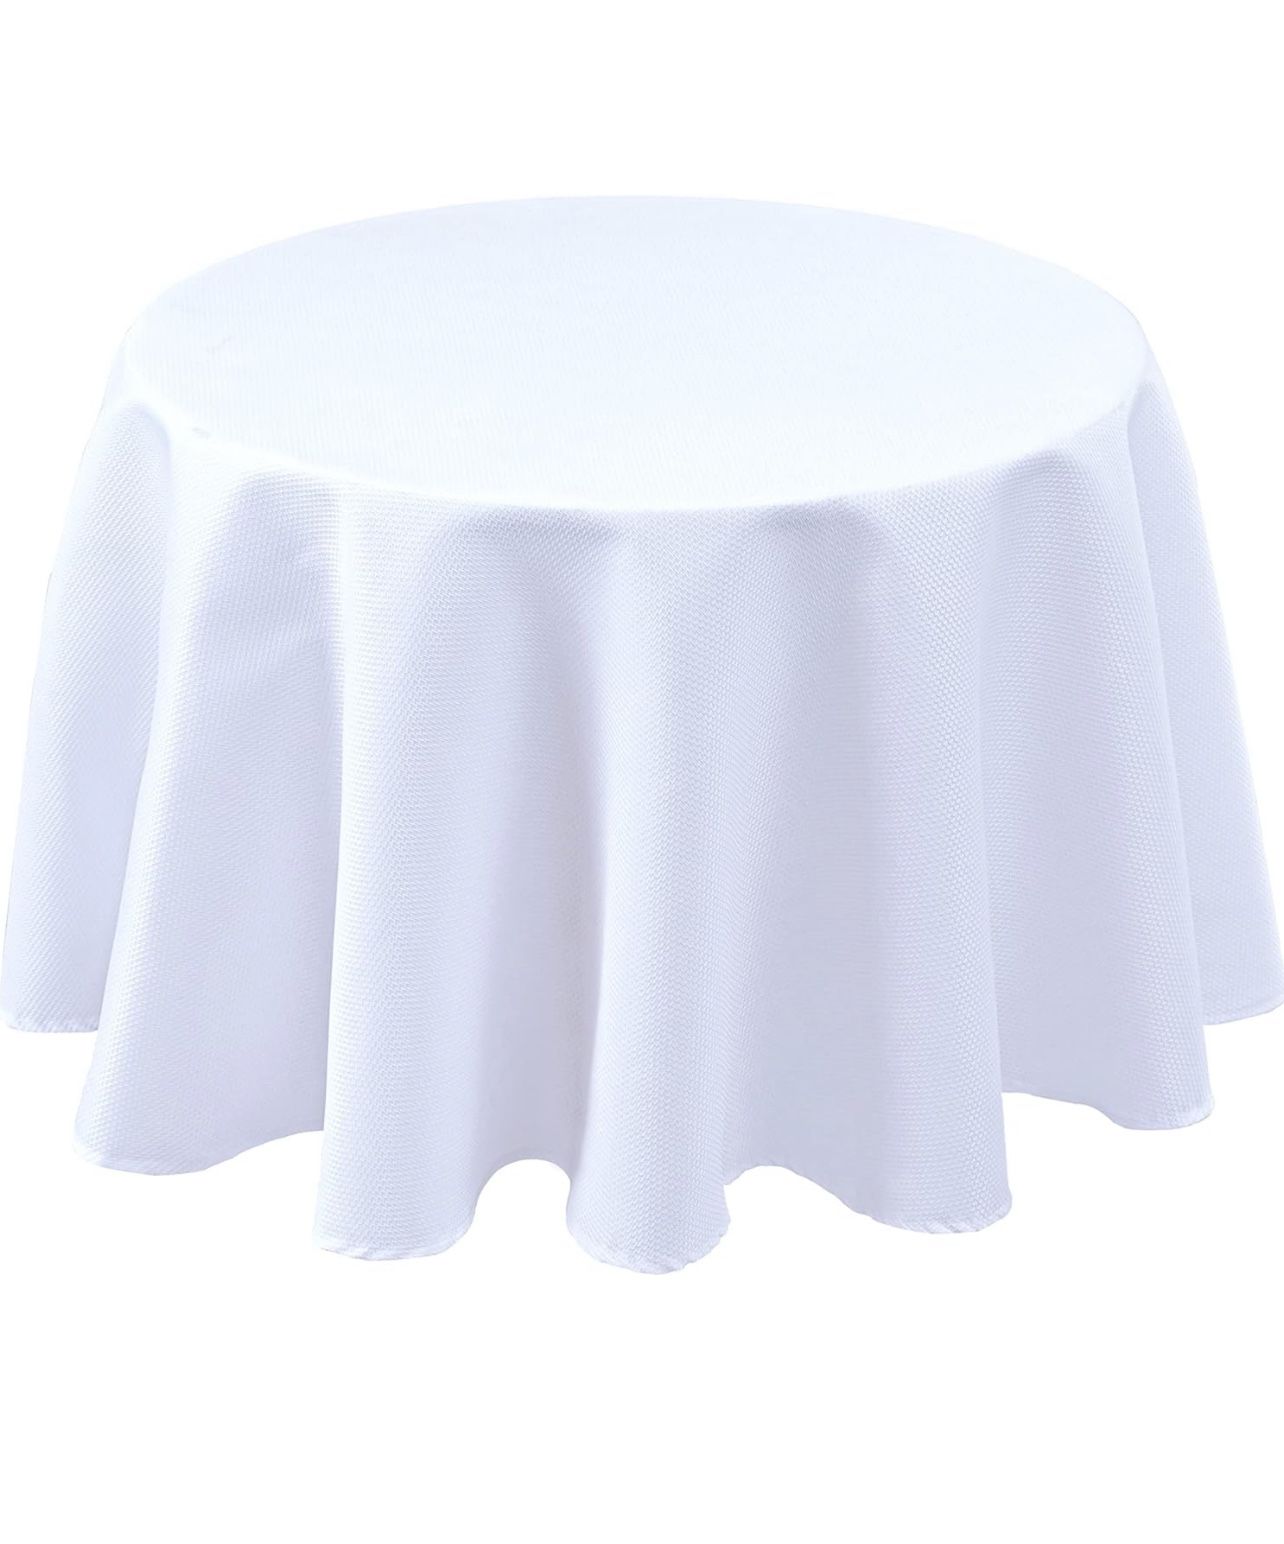 White table Cloths